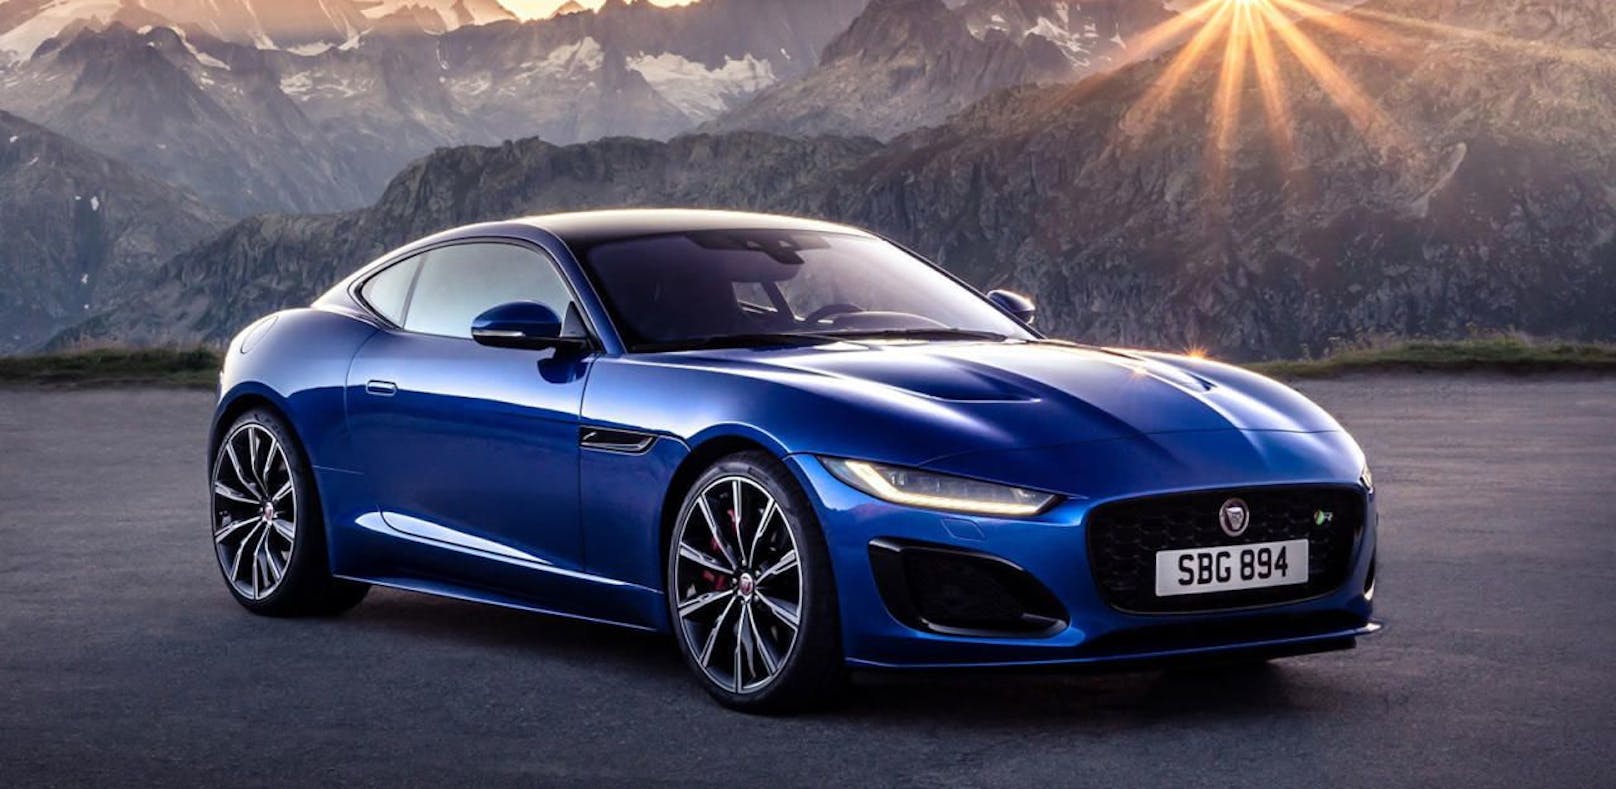 Jaguar spendiert dem F-Type ein großes Facelift